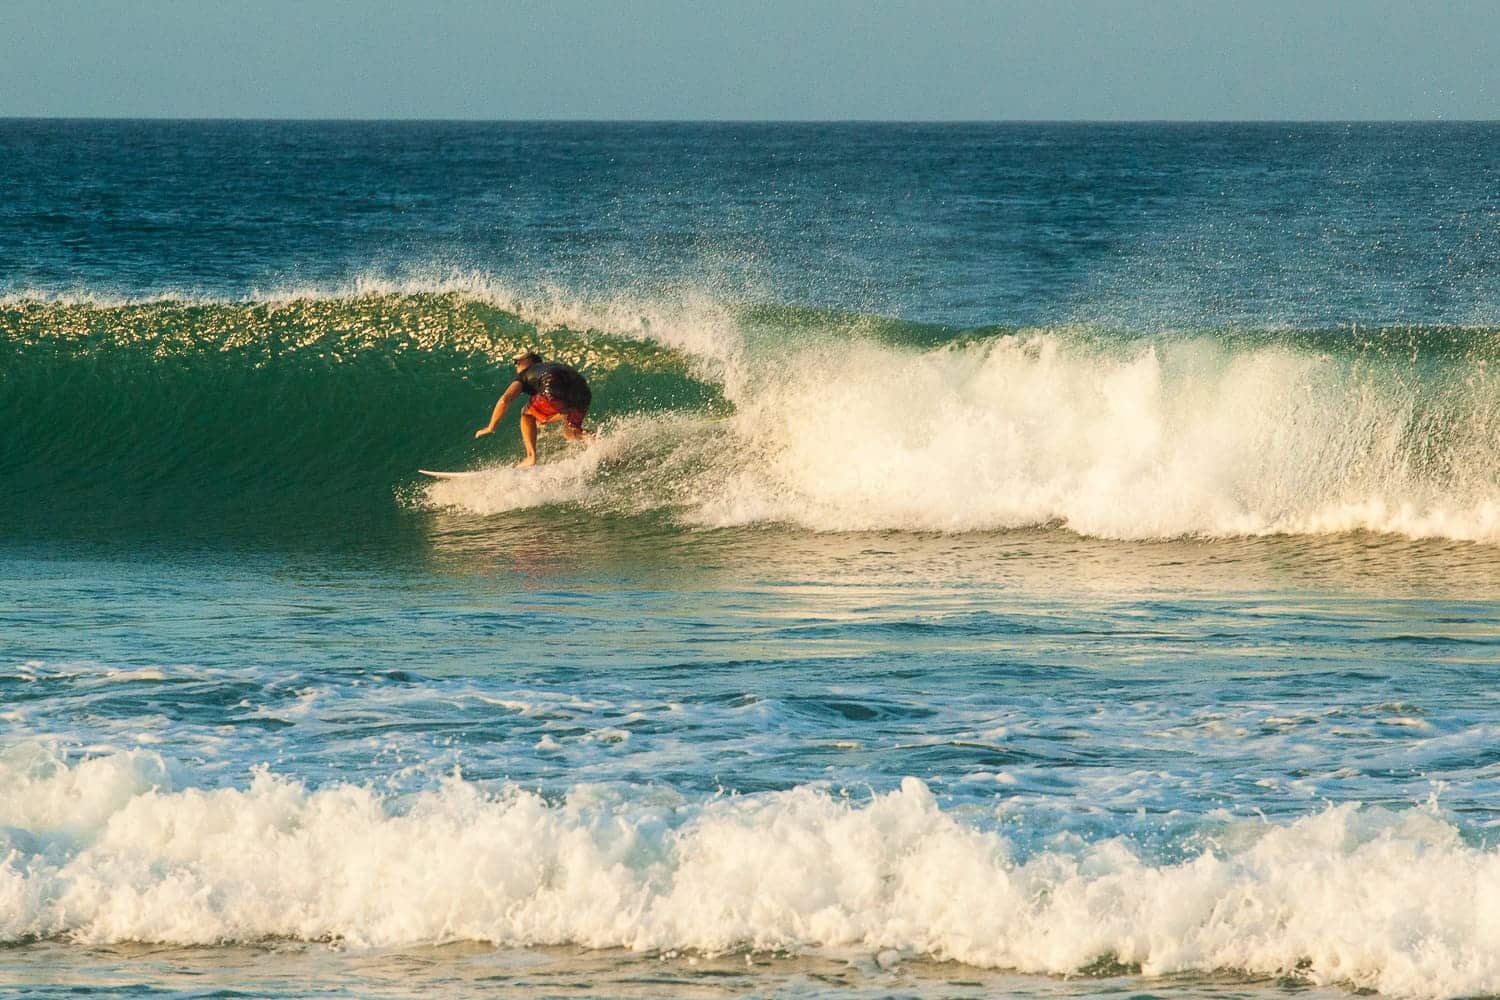 Surfing photo Byron Bay